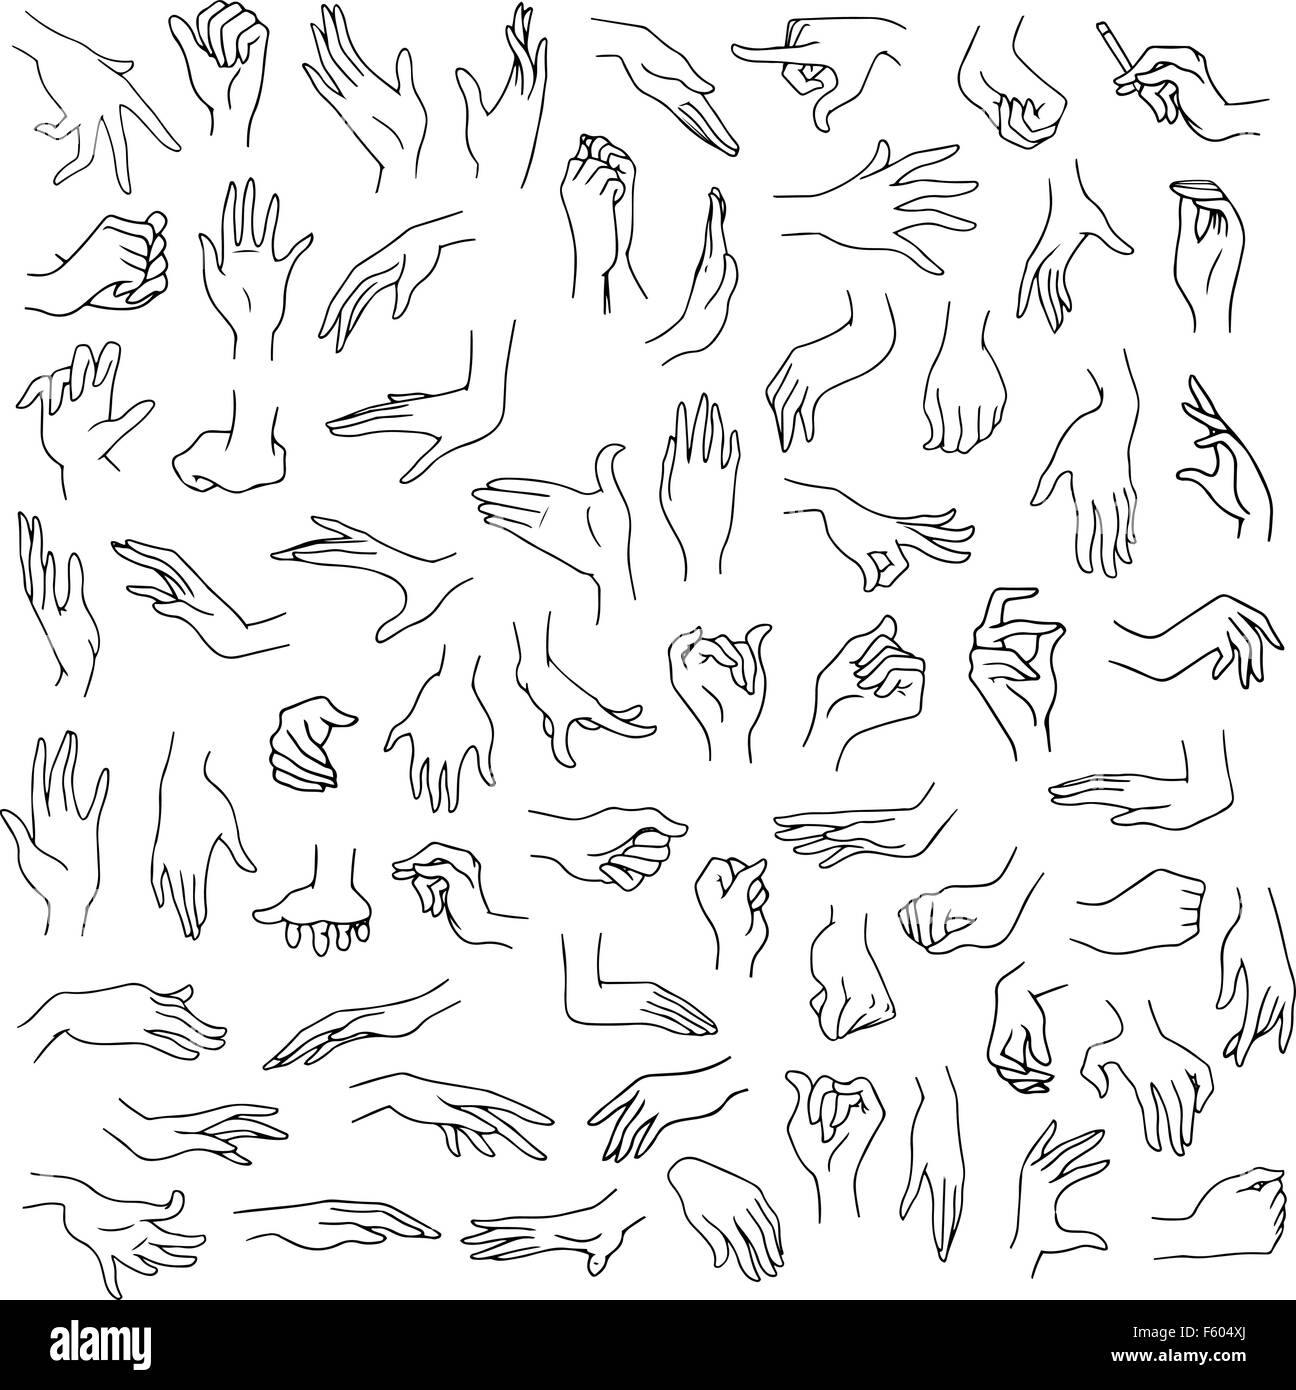 Vector illustration line art pack of woman hands in various gestures. Stock Vector